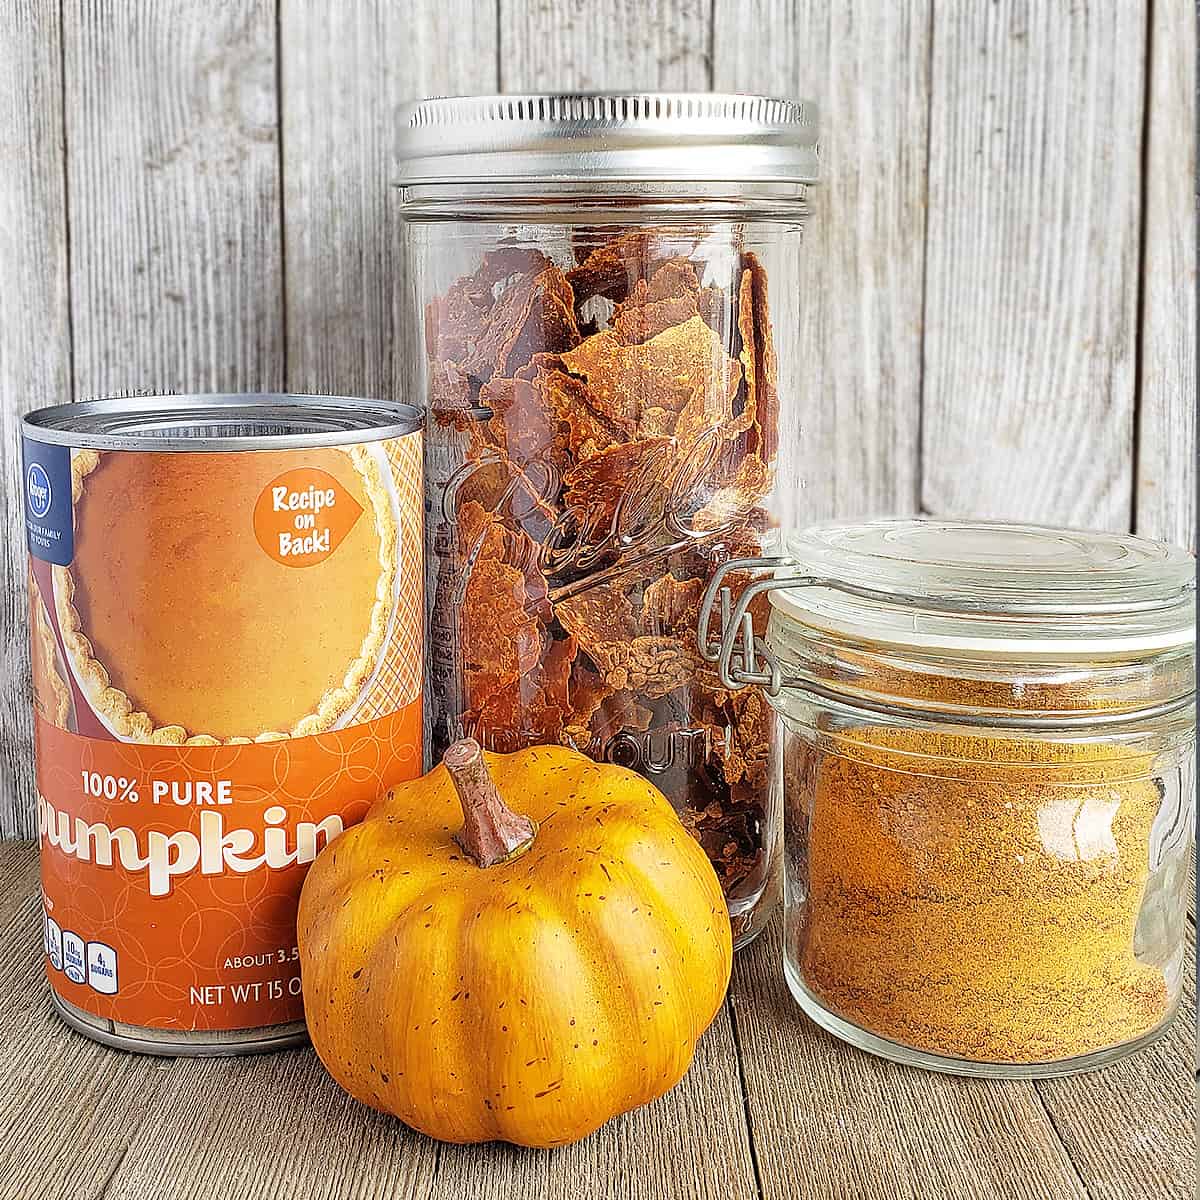 Canned pumpkin dried in a jar (pumpkin leather) with pumpkin powder for food storage